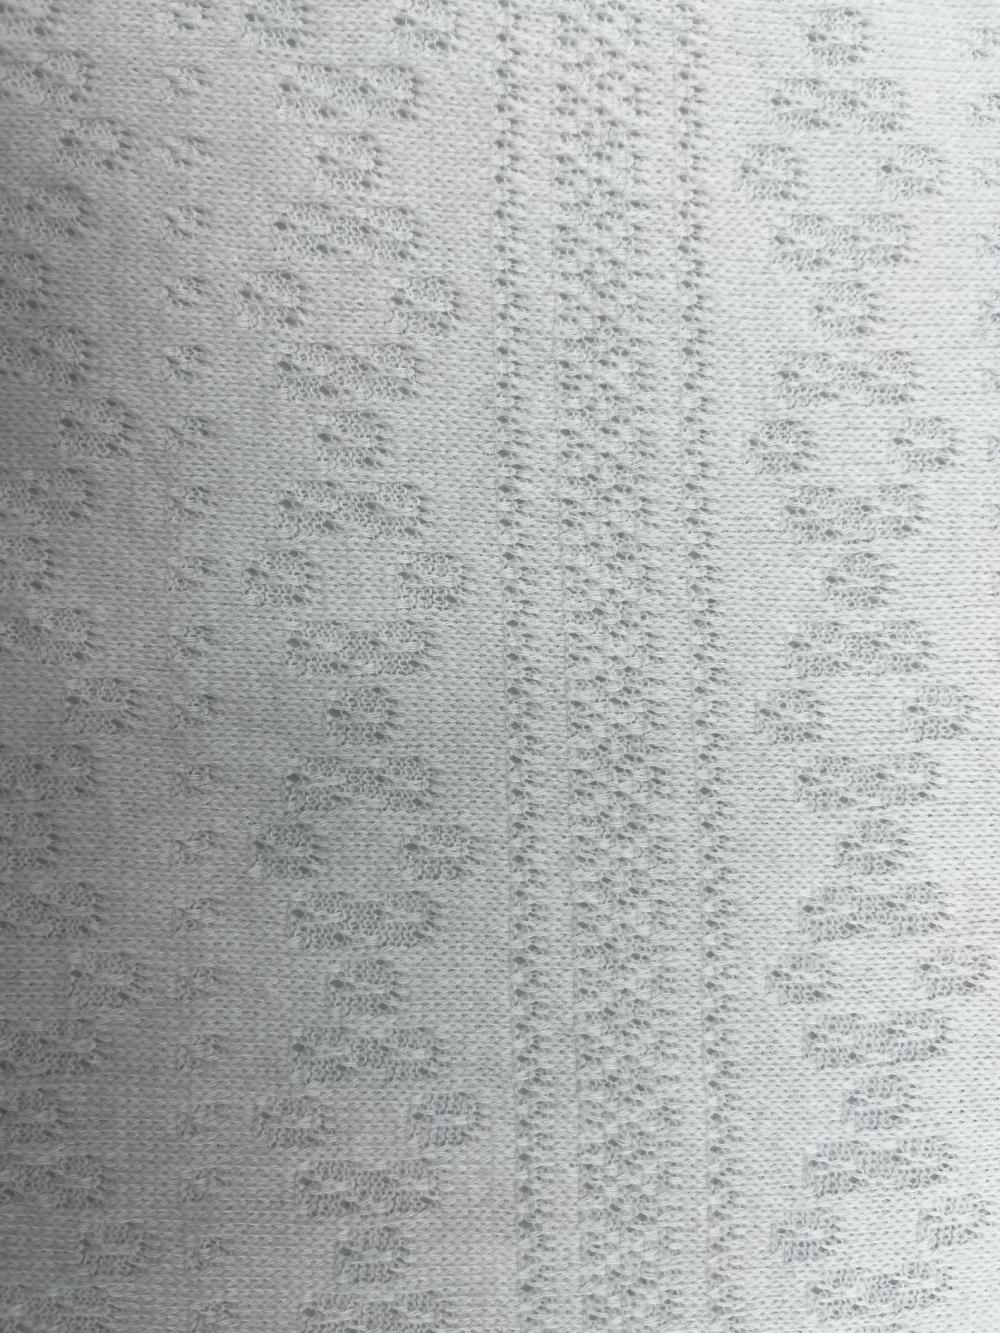 65% Polyester 35% Rayon Jersey Fabric